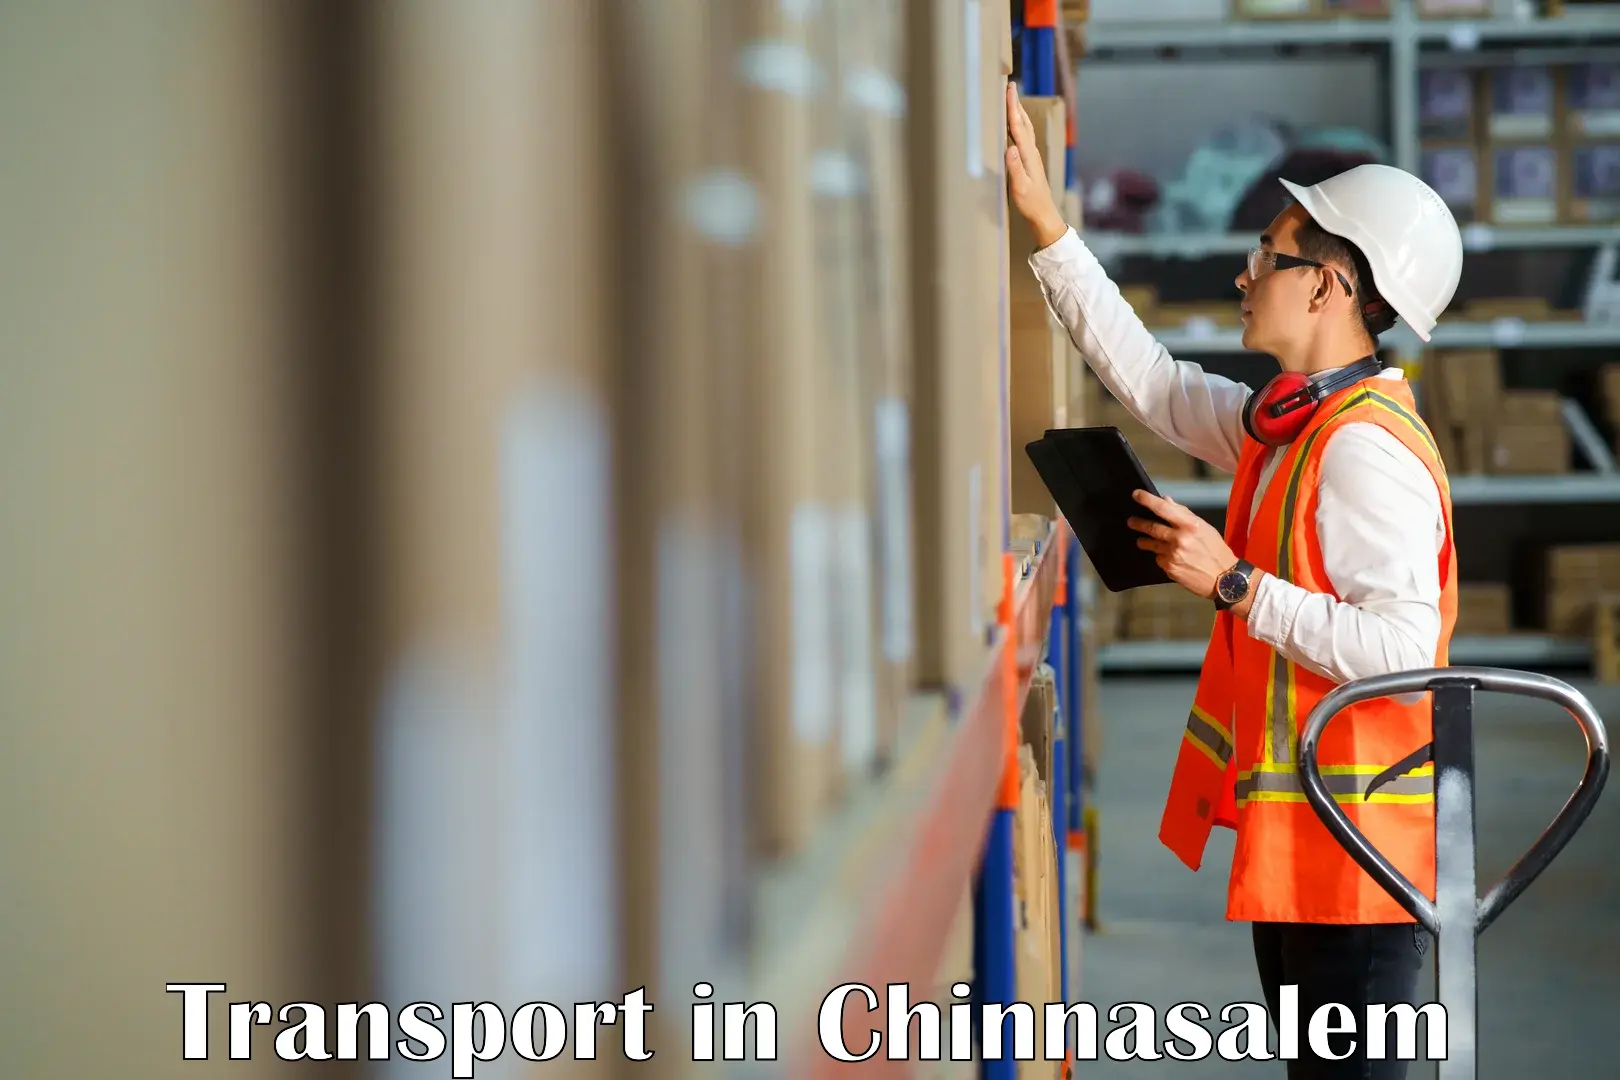 Cargo train transport services in Chinnasalem